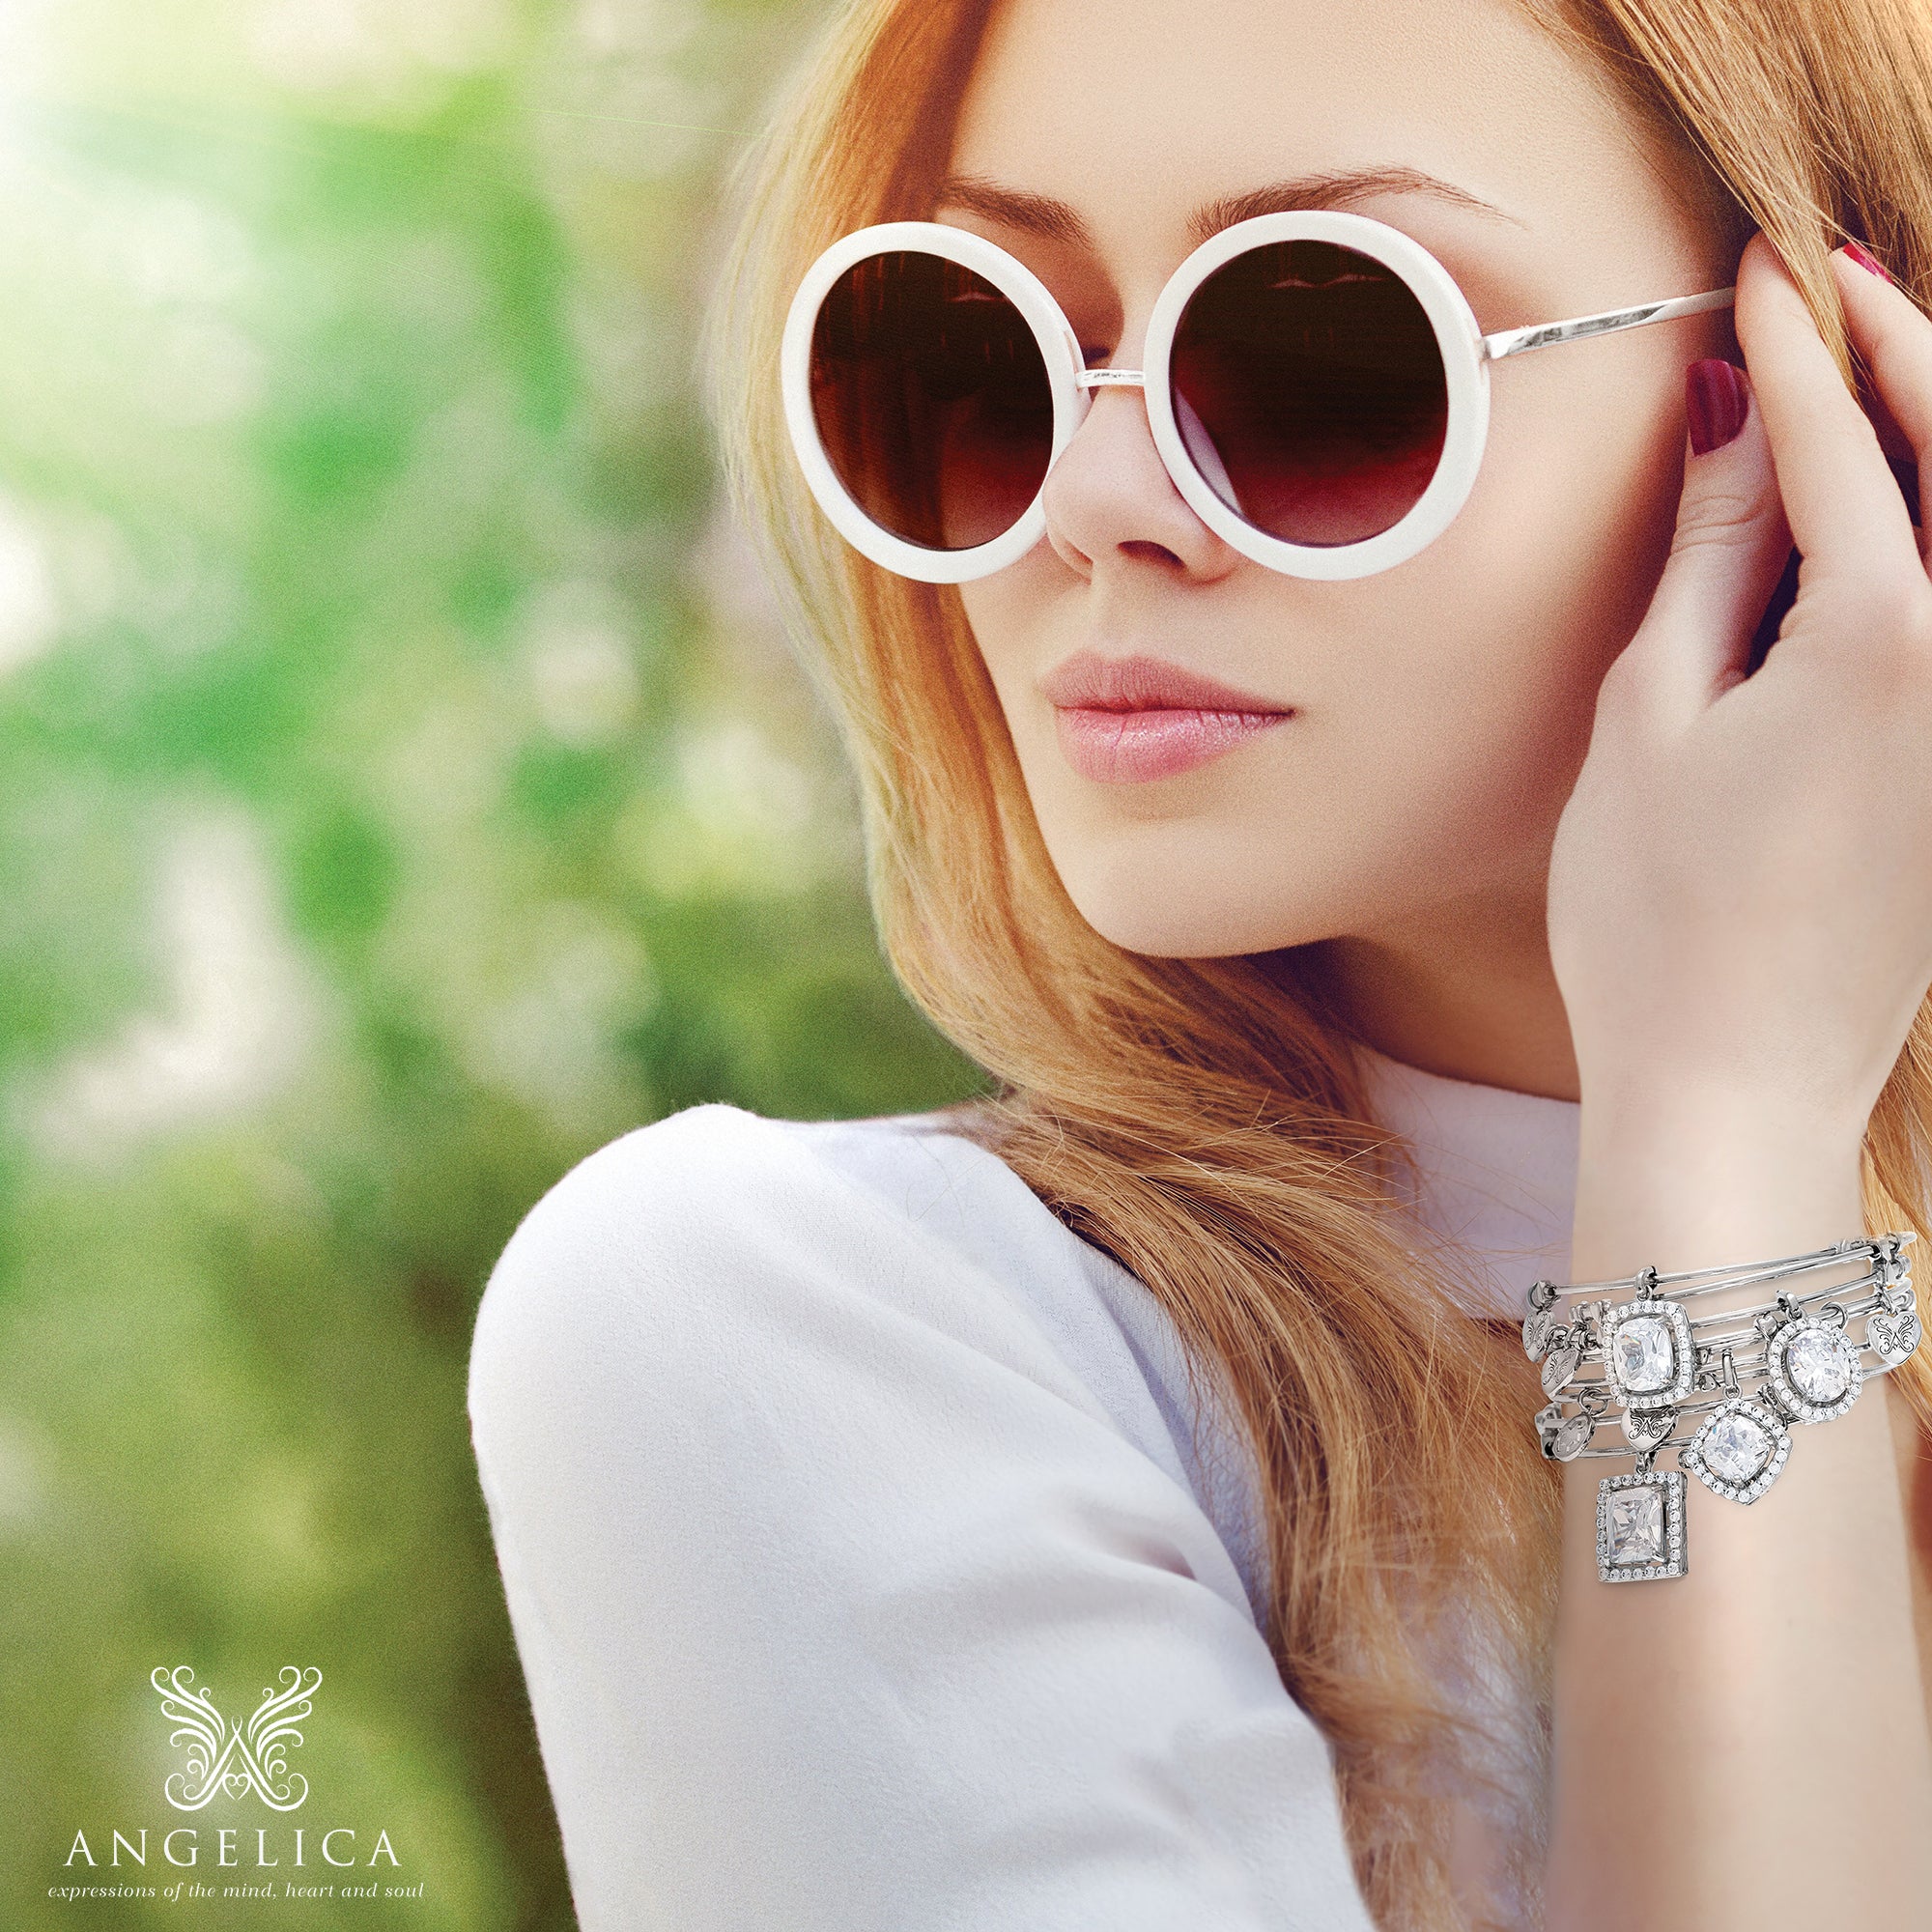 Stipple Finish Brass Love You Angelica Bangle Bracelet, 7.25" fine designer jewelry for men and women